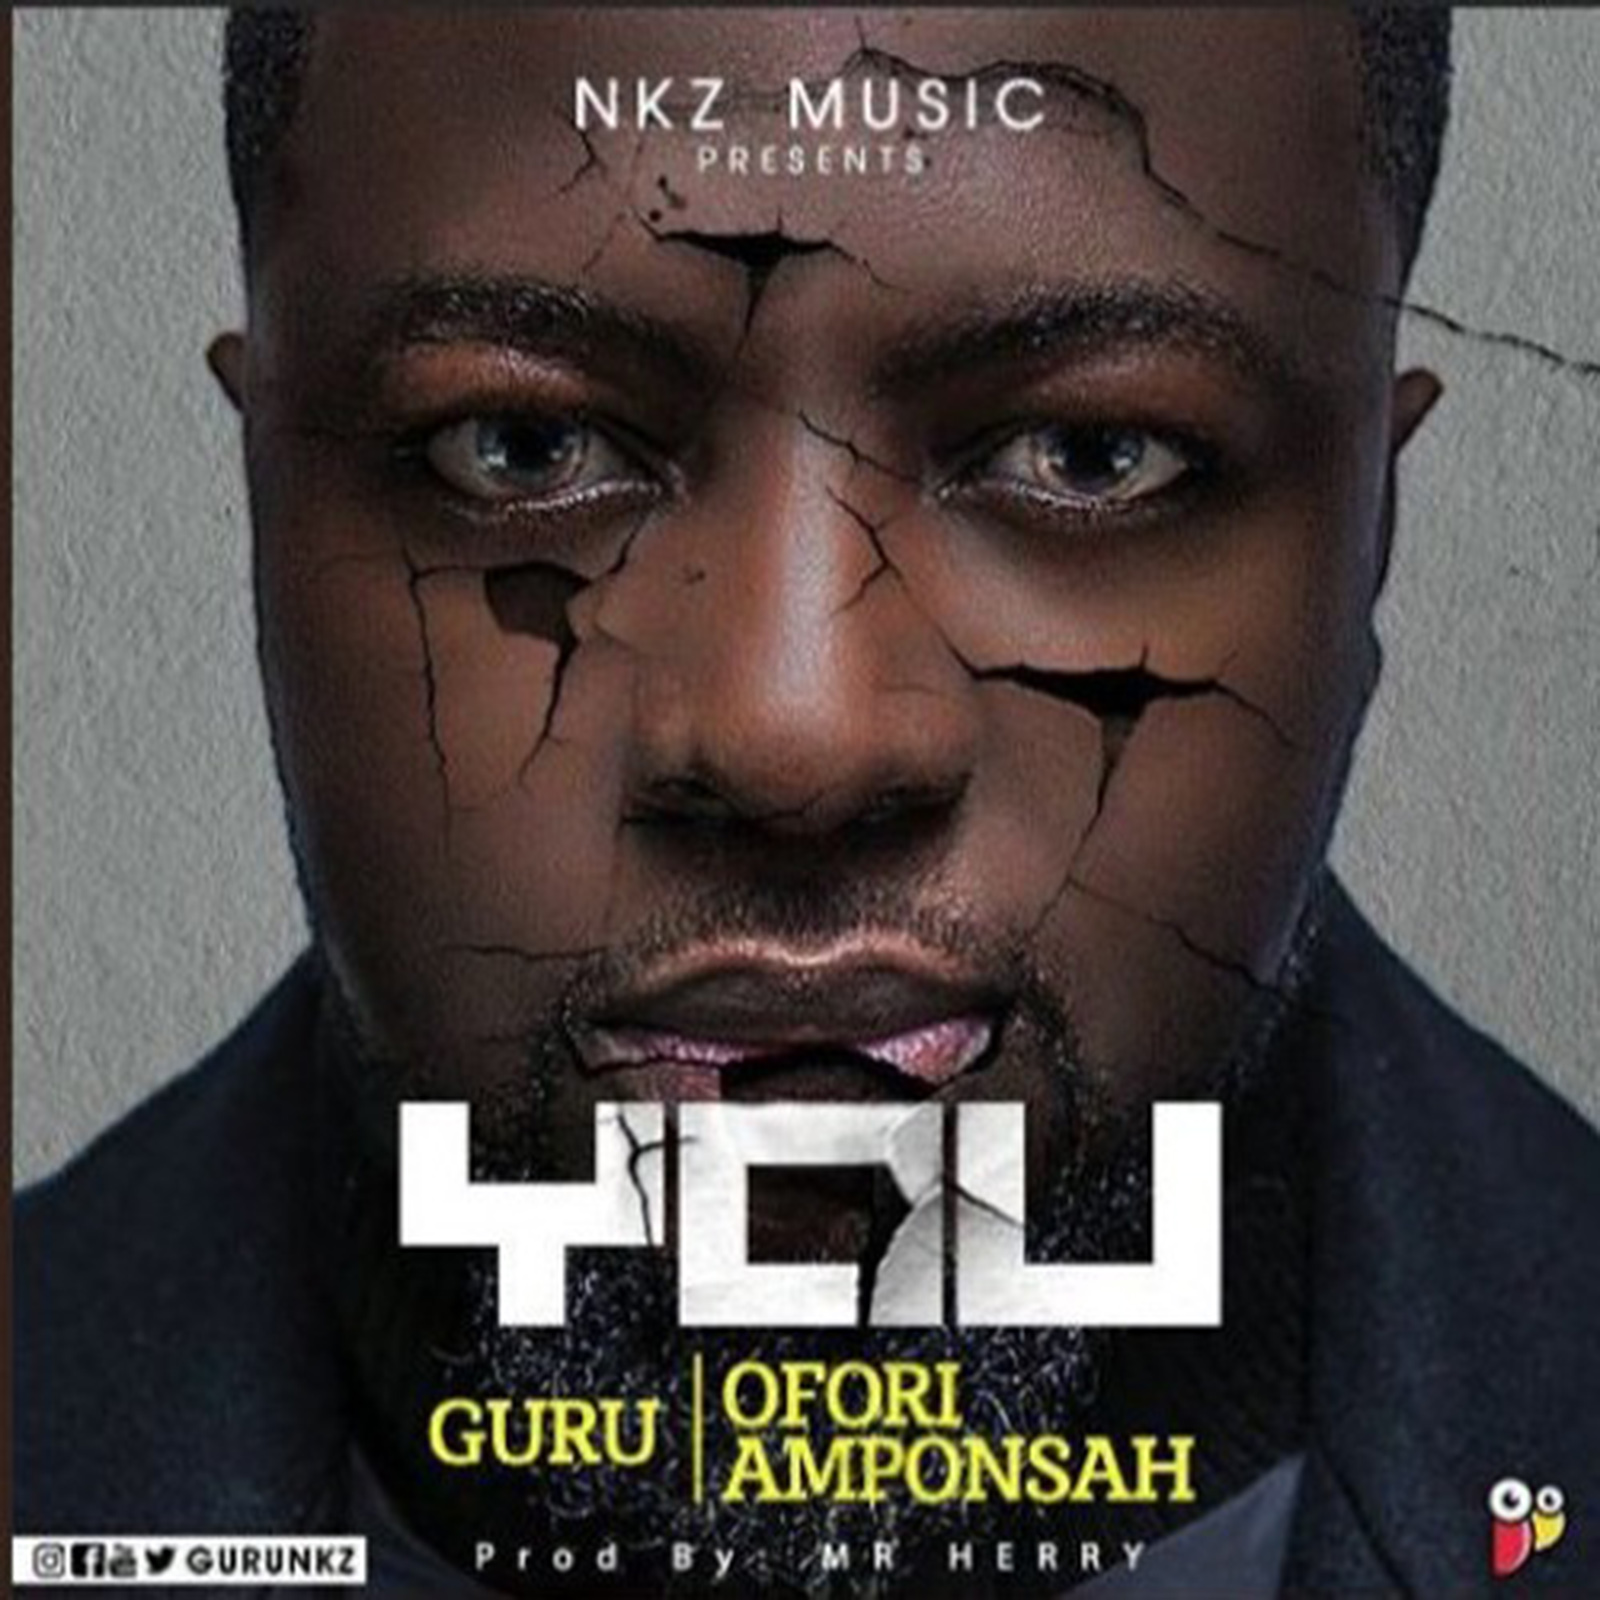 You by Guru feat. Ofori Amponsah